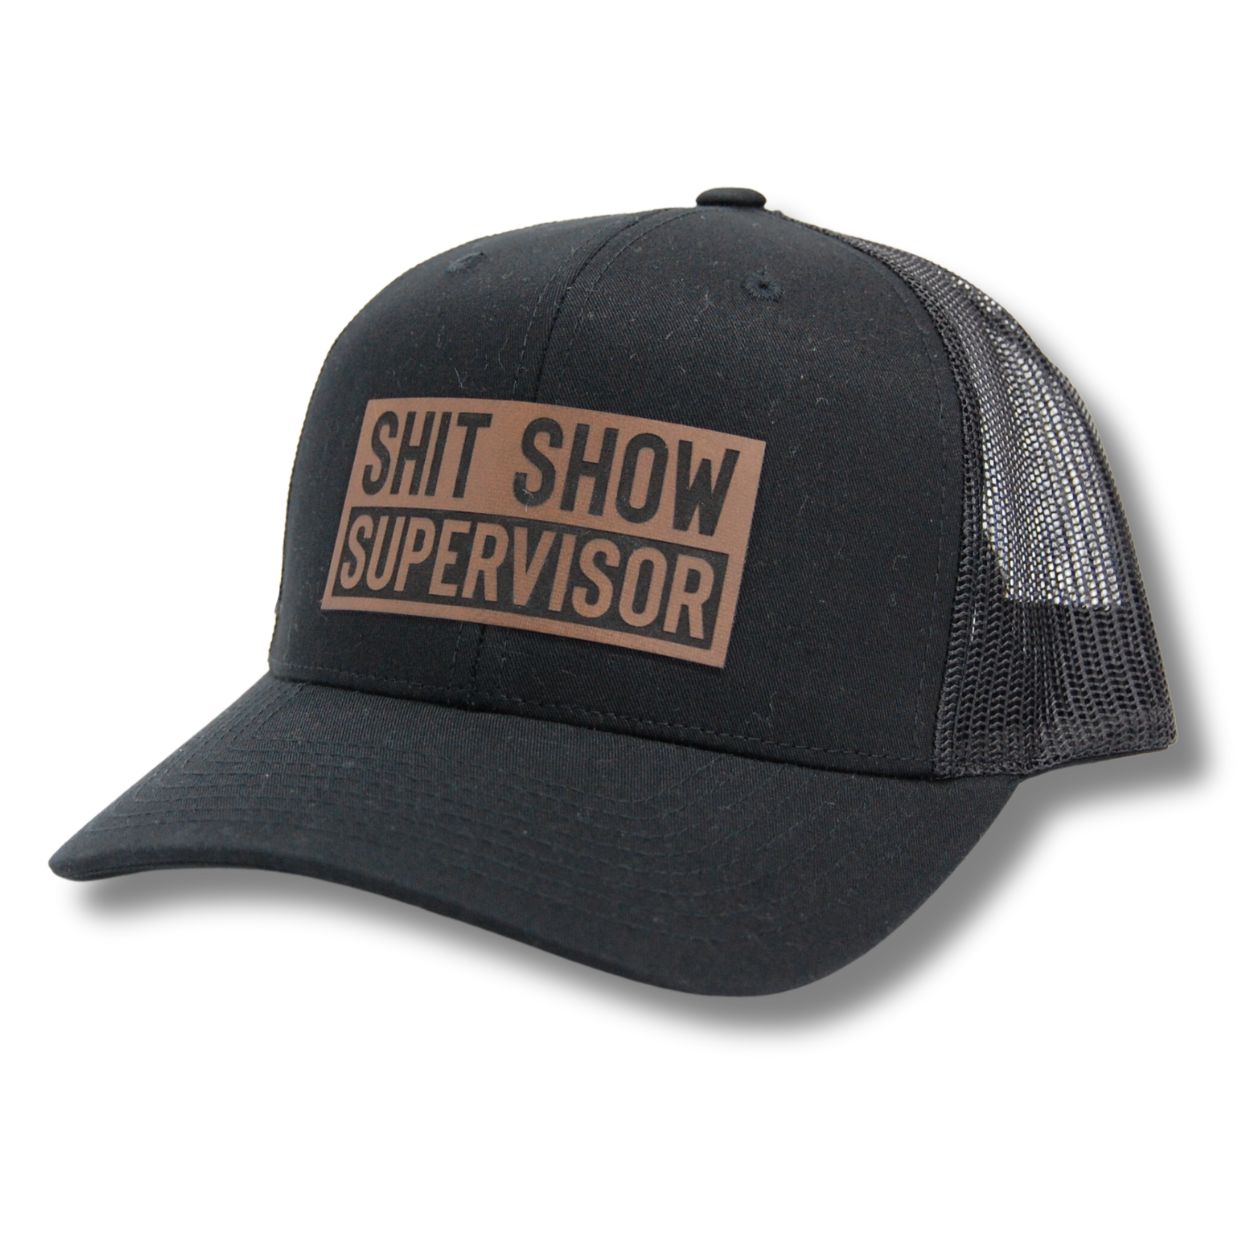 Shit Show Supervisor Patch Hat Snapback Trucker Cap Blue Collar Patriot 